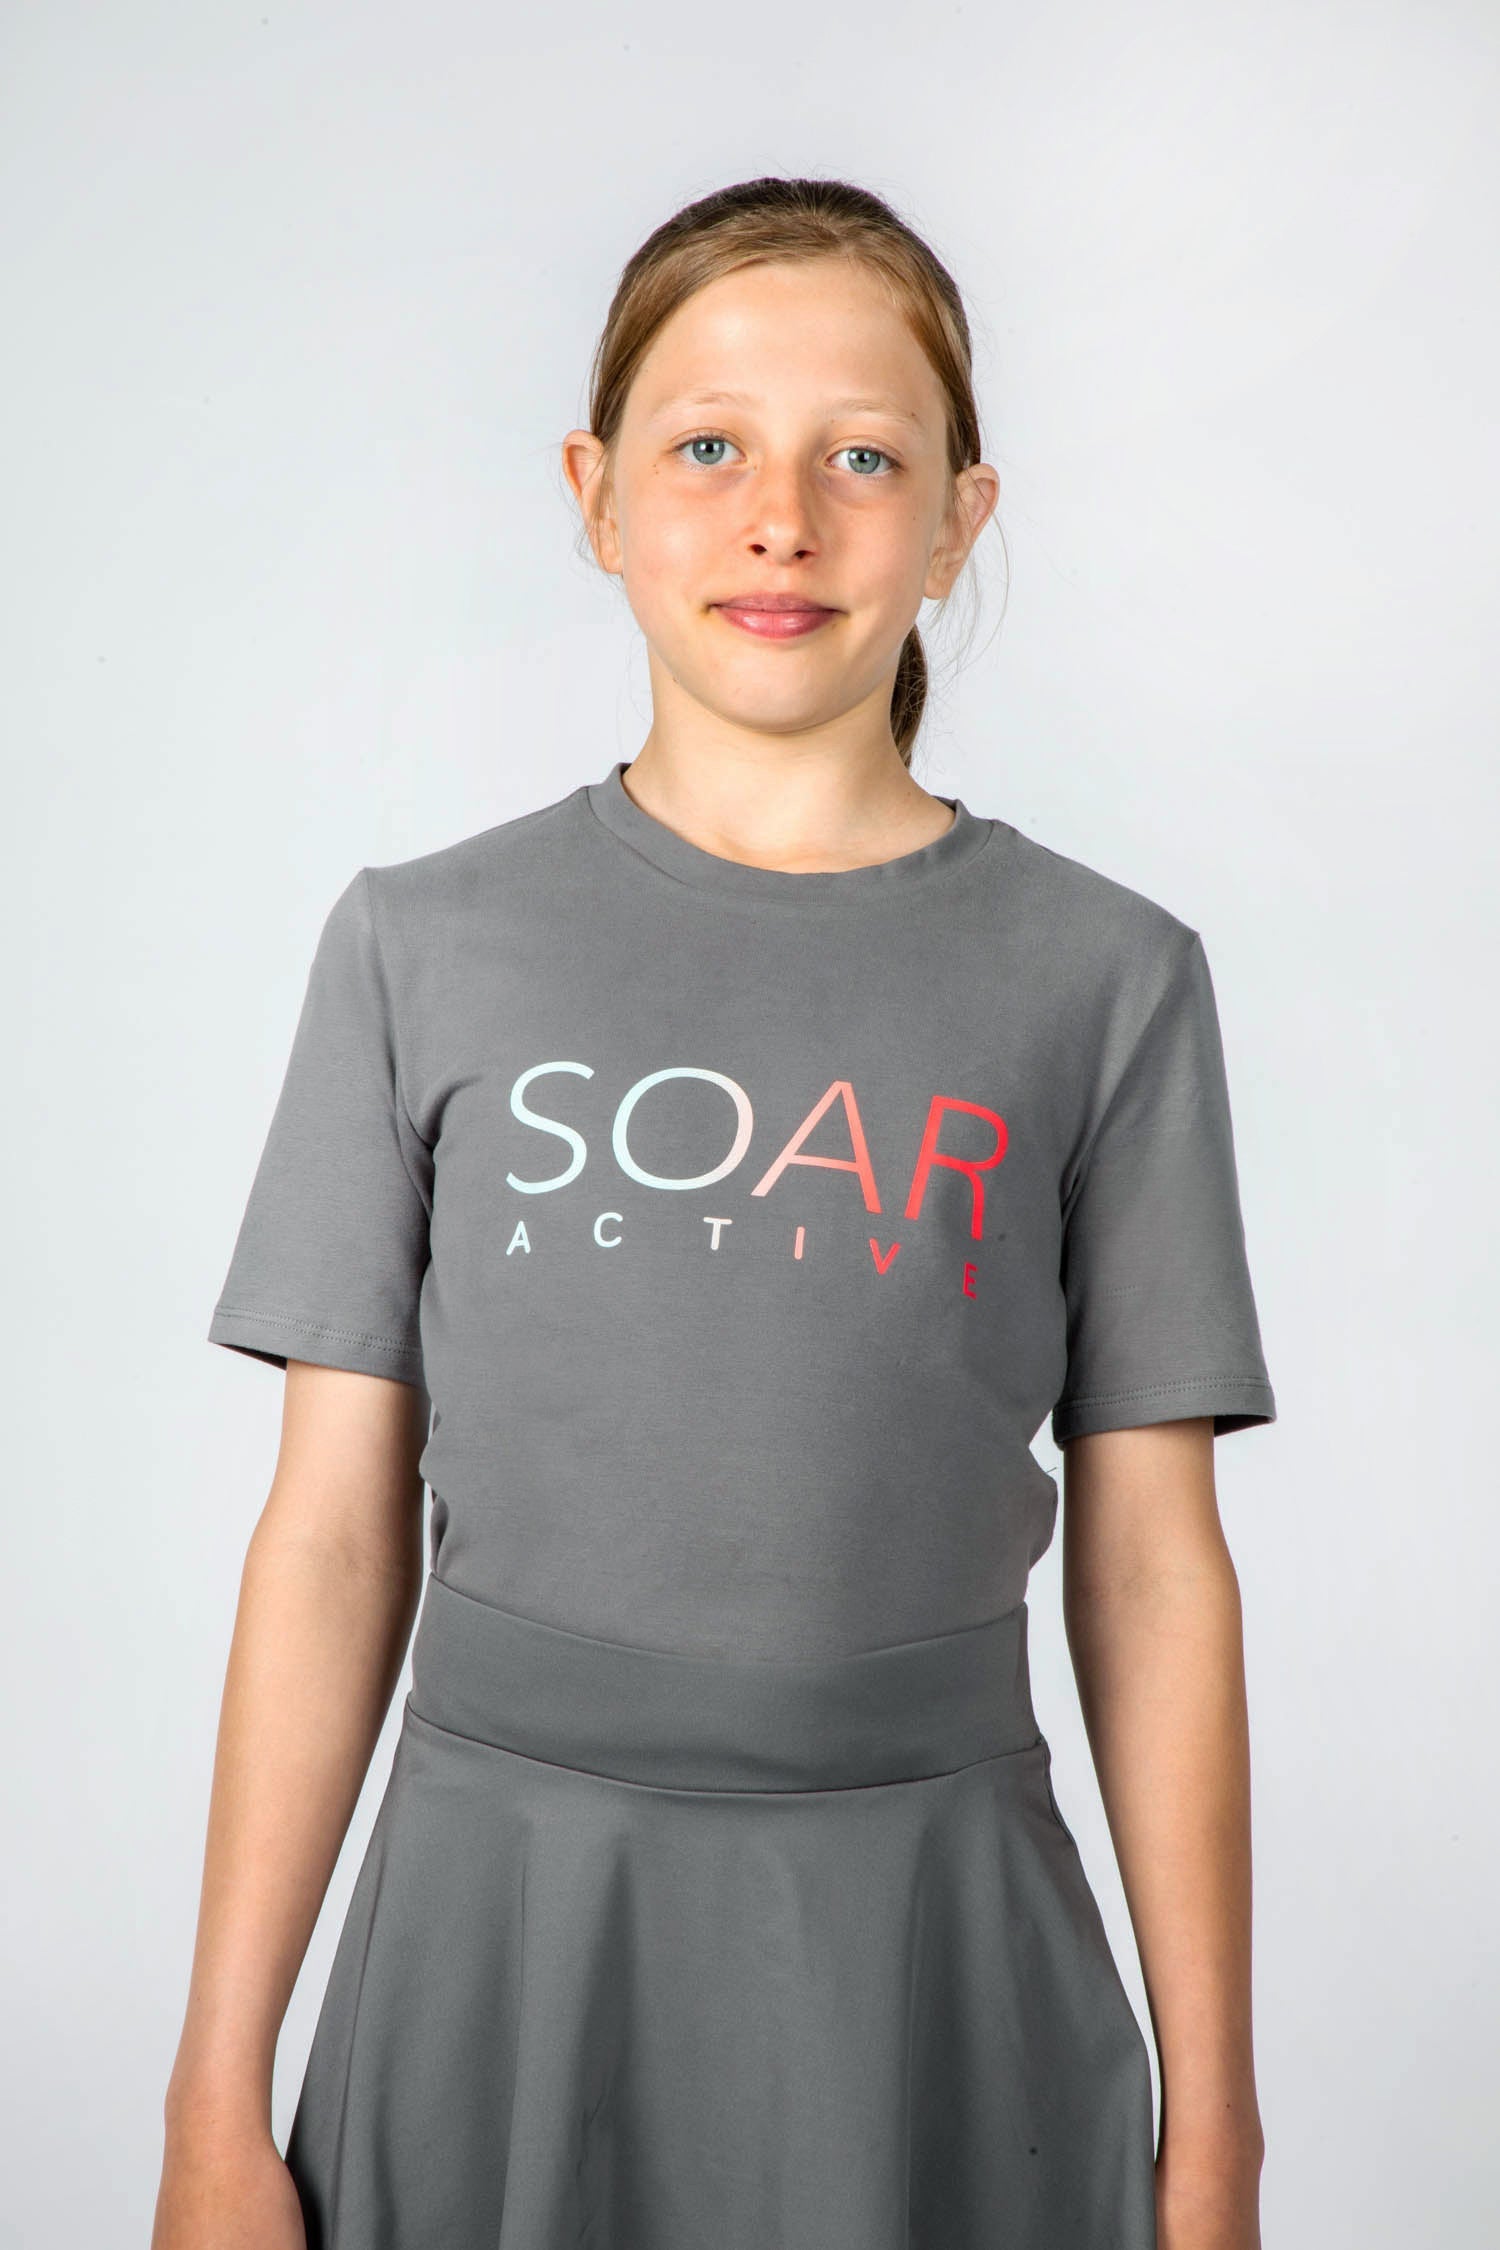 Soar Active t-shirt XS / Charcoal Rise Dynamic Tee